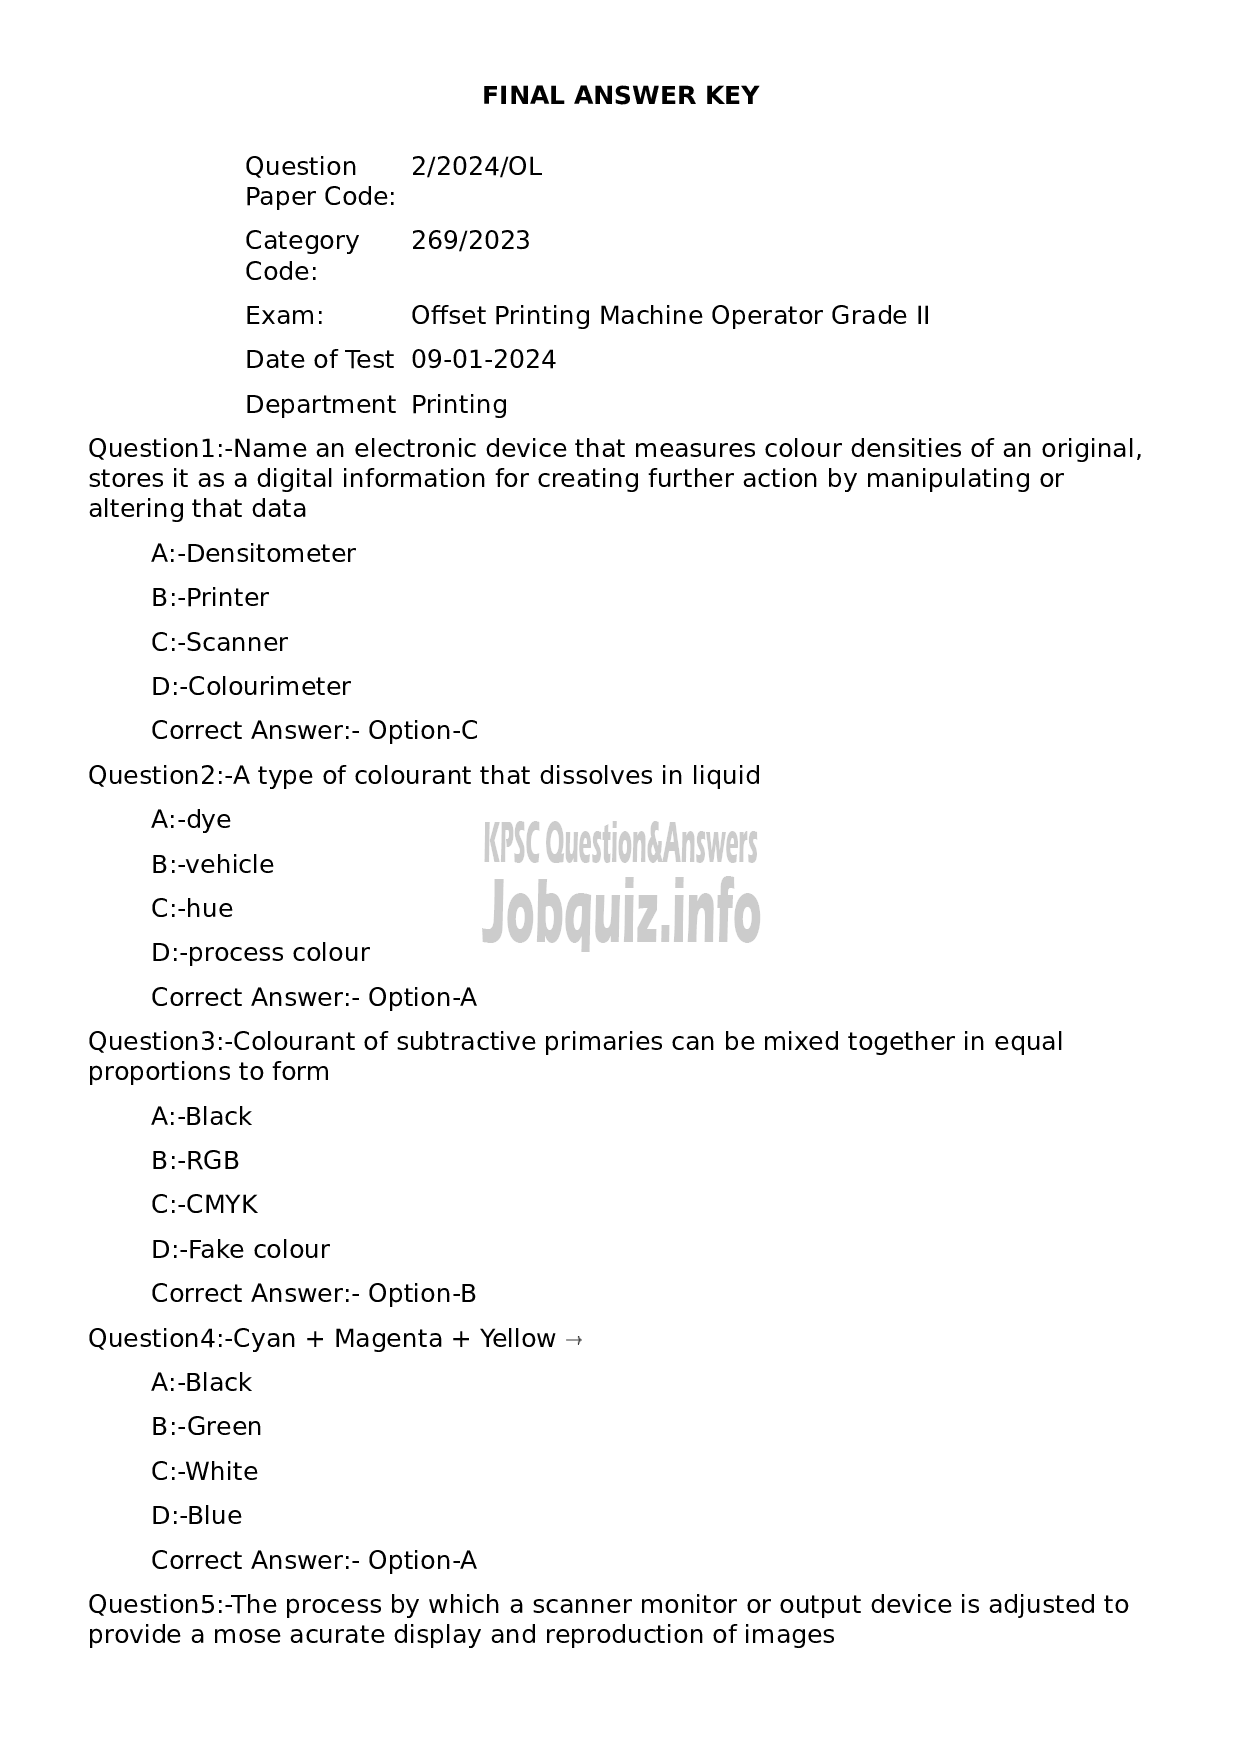 Kerala PSC Question Paper - Offset Printing Machine Operator Grade II-1